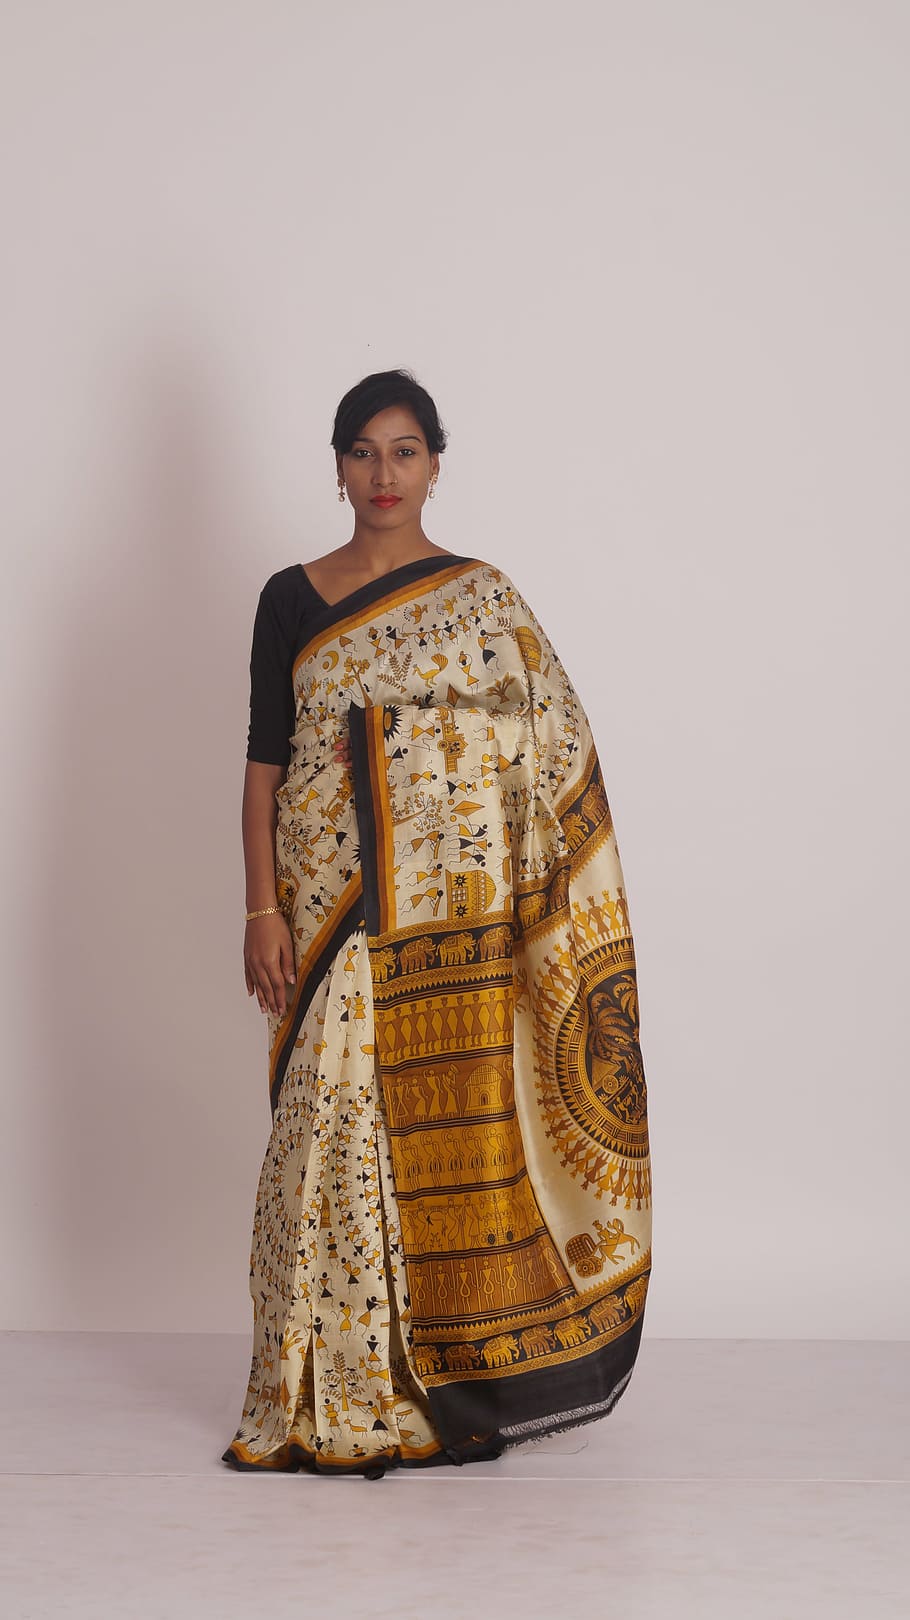 kollam sarees, womens wear, saree, indian, ethnic, clothing, fashion, silk, dress, woman